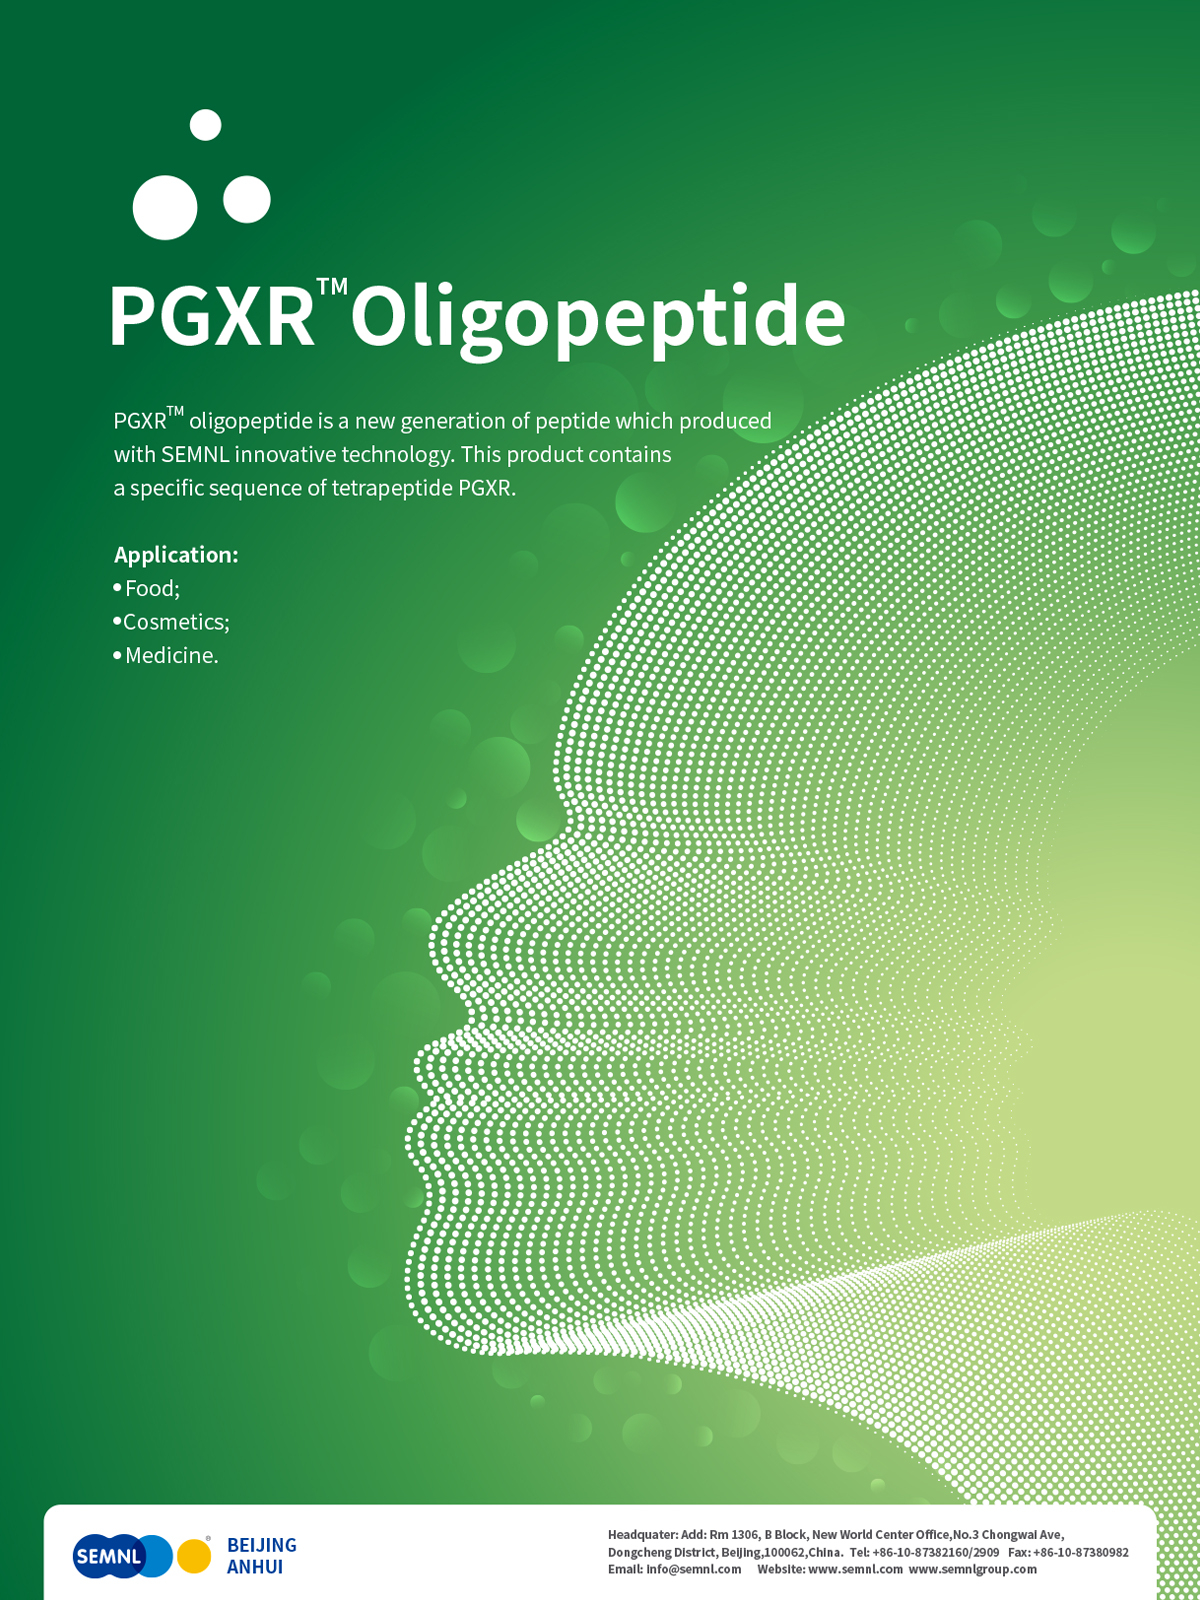 PGXR<sup>TM</sup></span>Oligopeptide